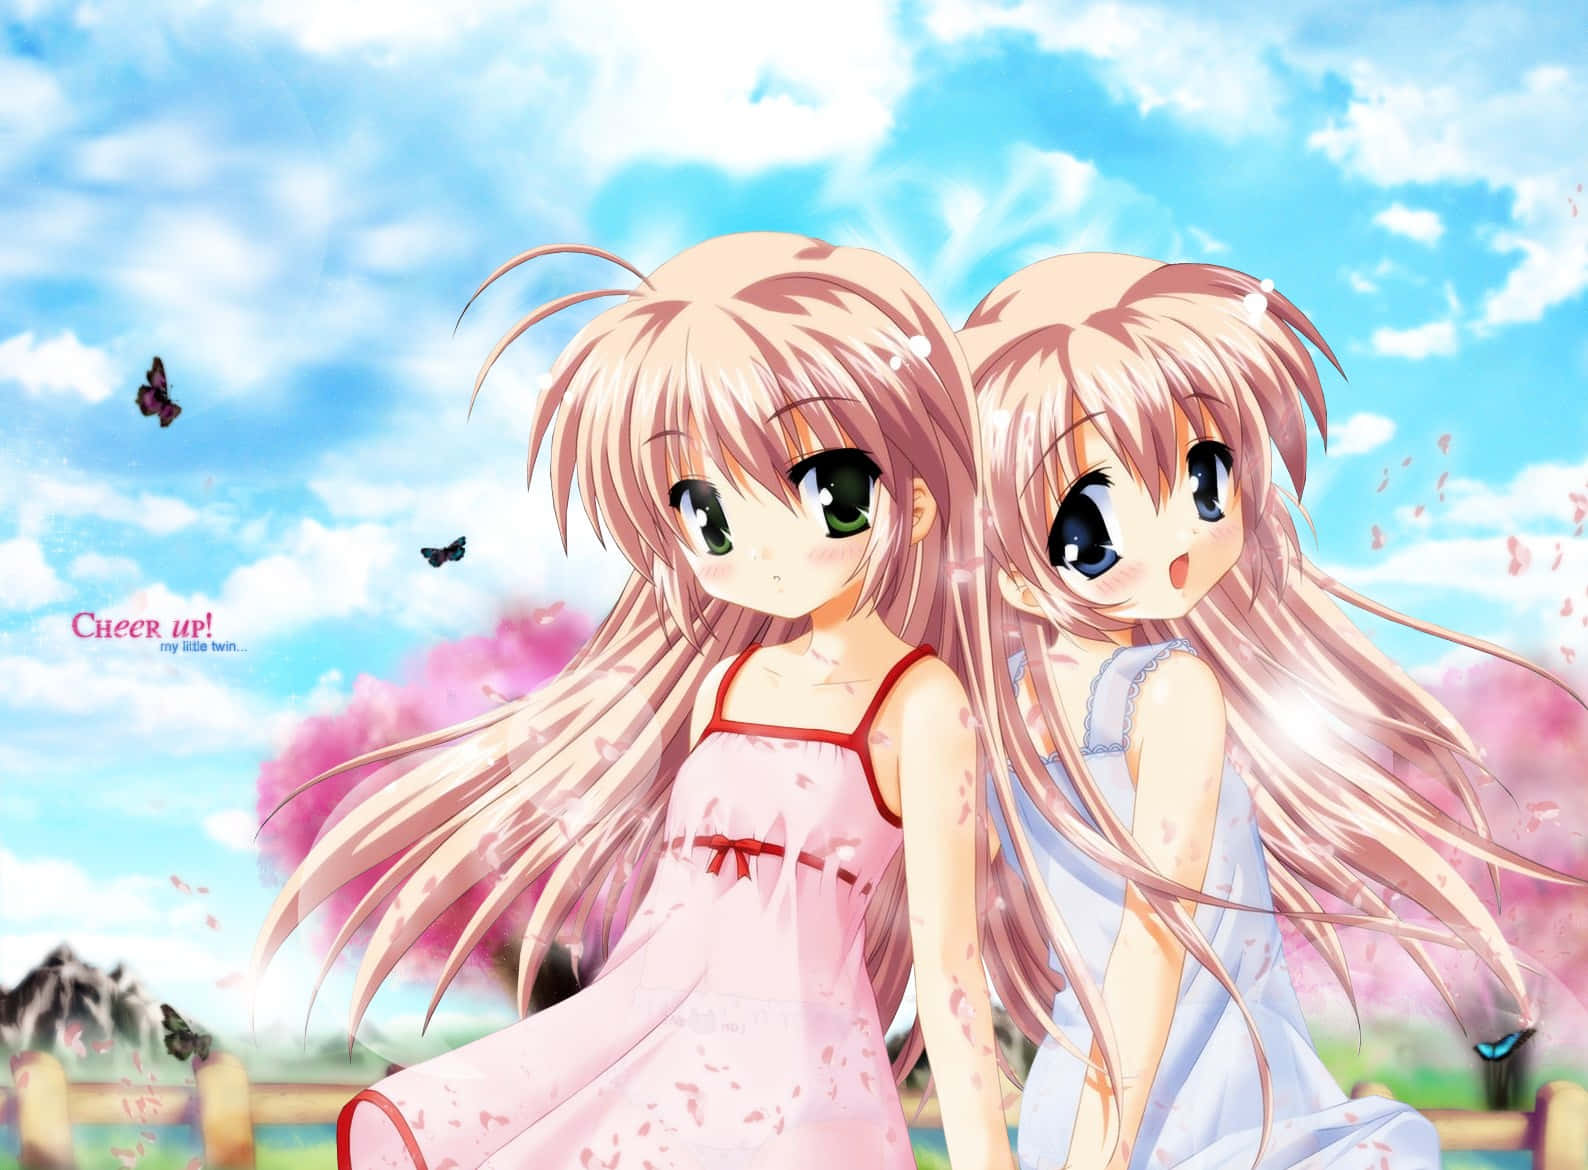 Dazzling Anime Digital Artwork Of Cute Sisters Wallpaper